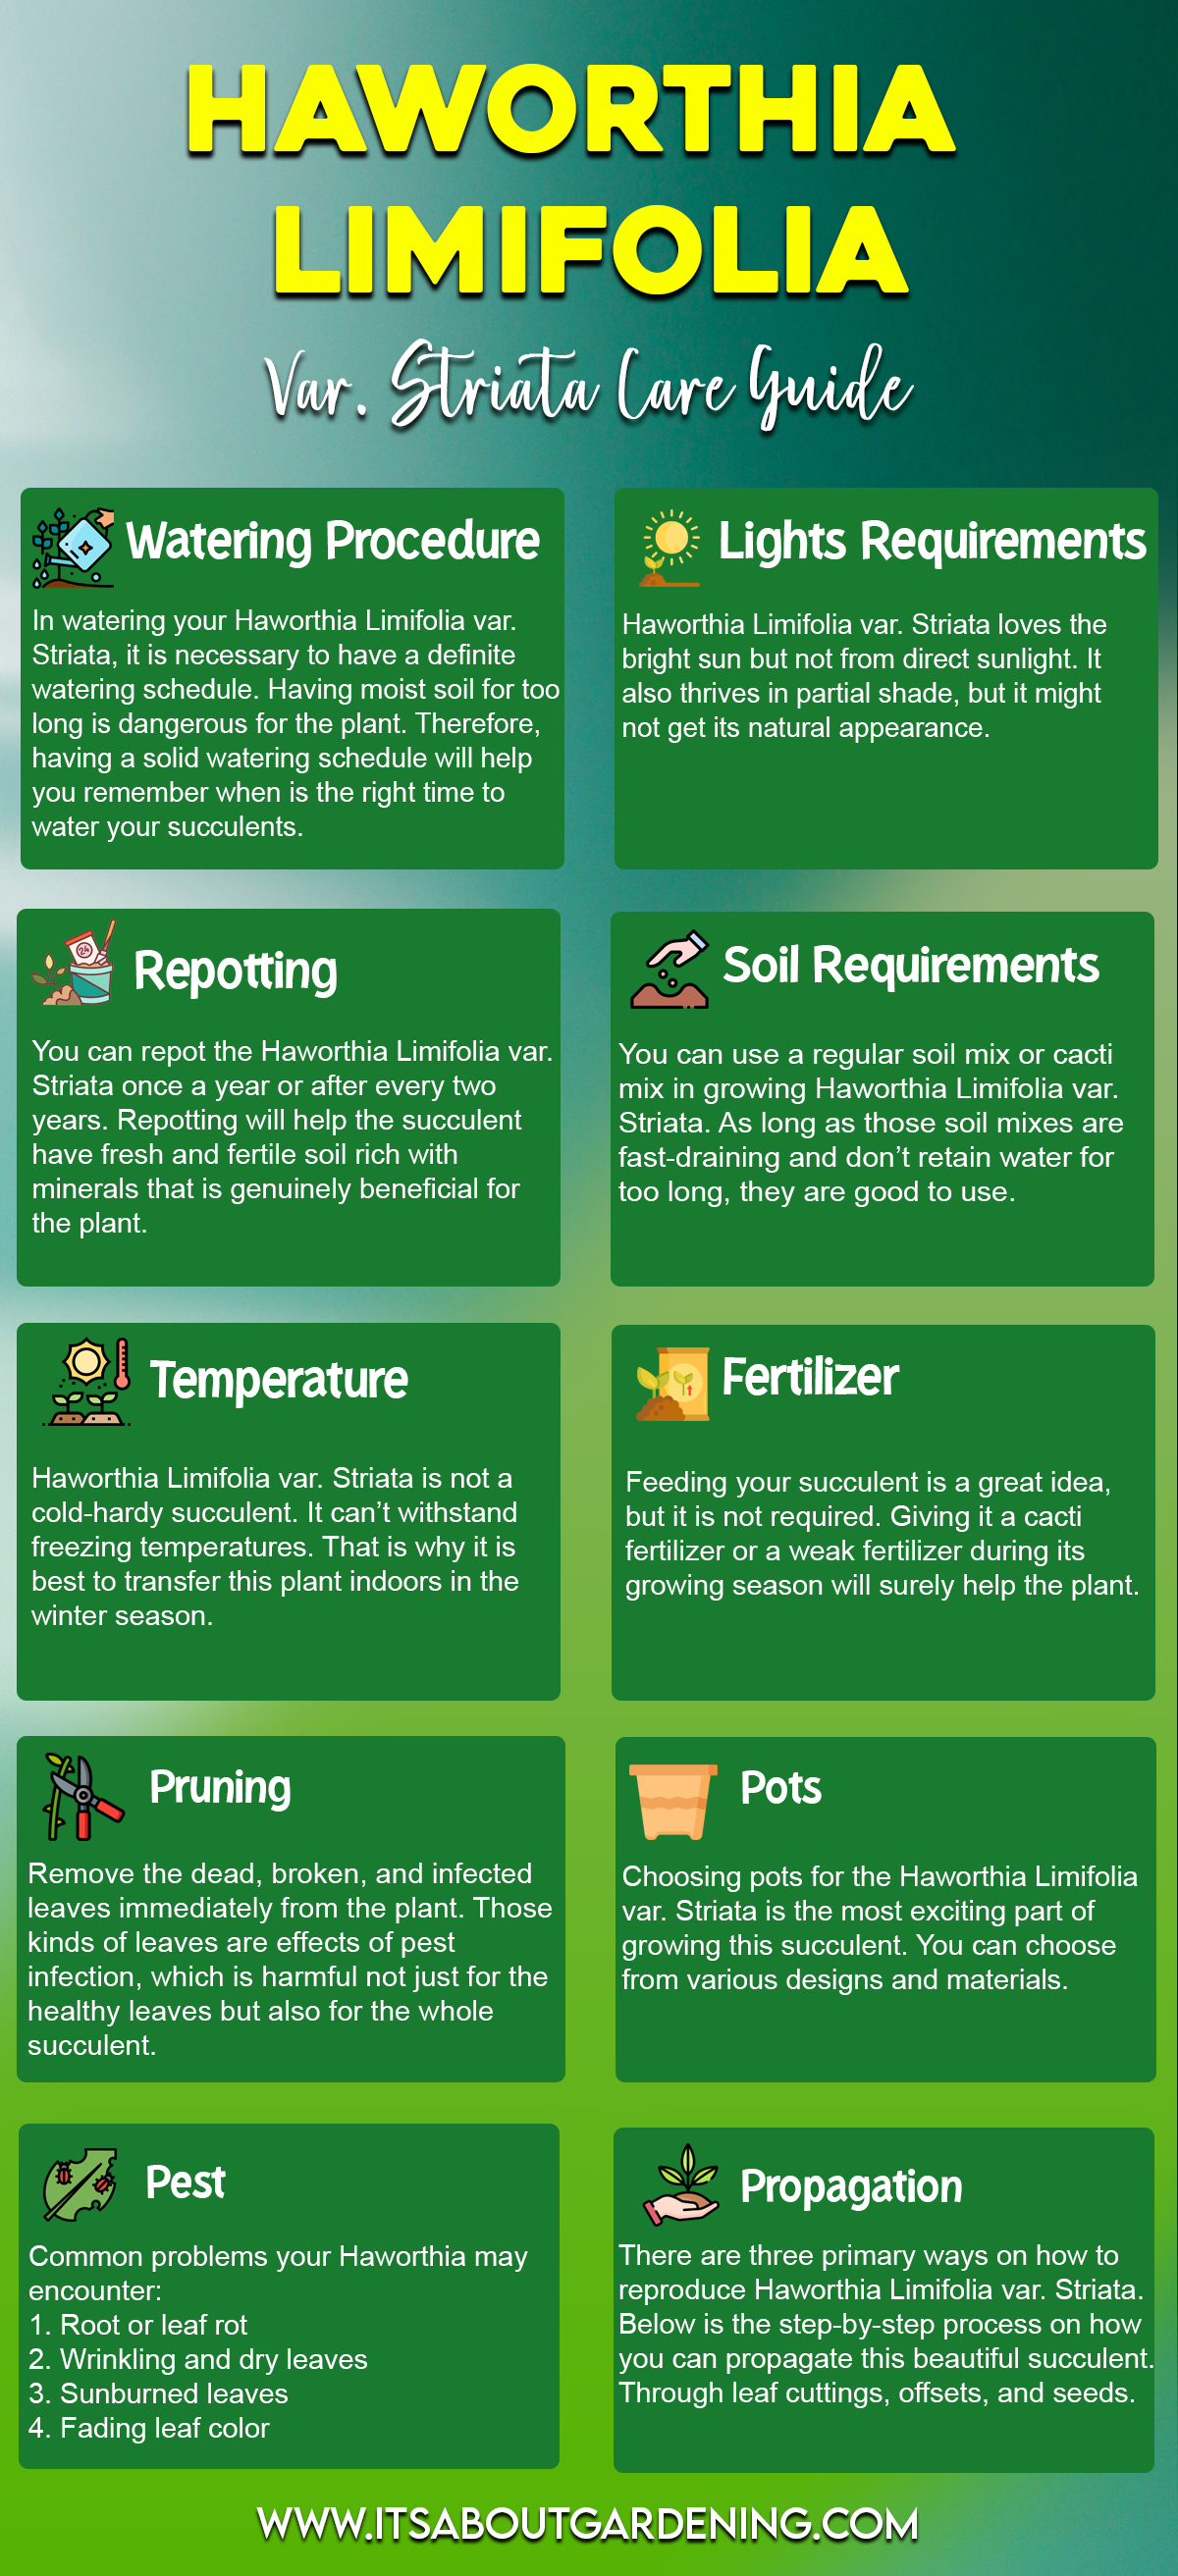 Haworthia Limifolia Var. Striata Care Guide Infographic